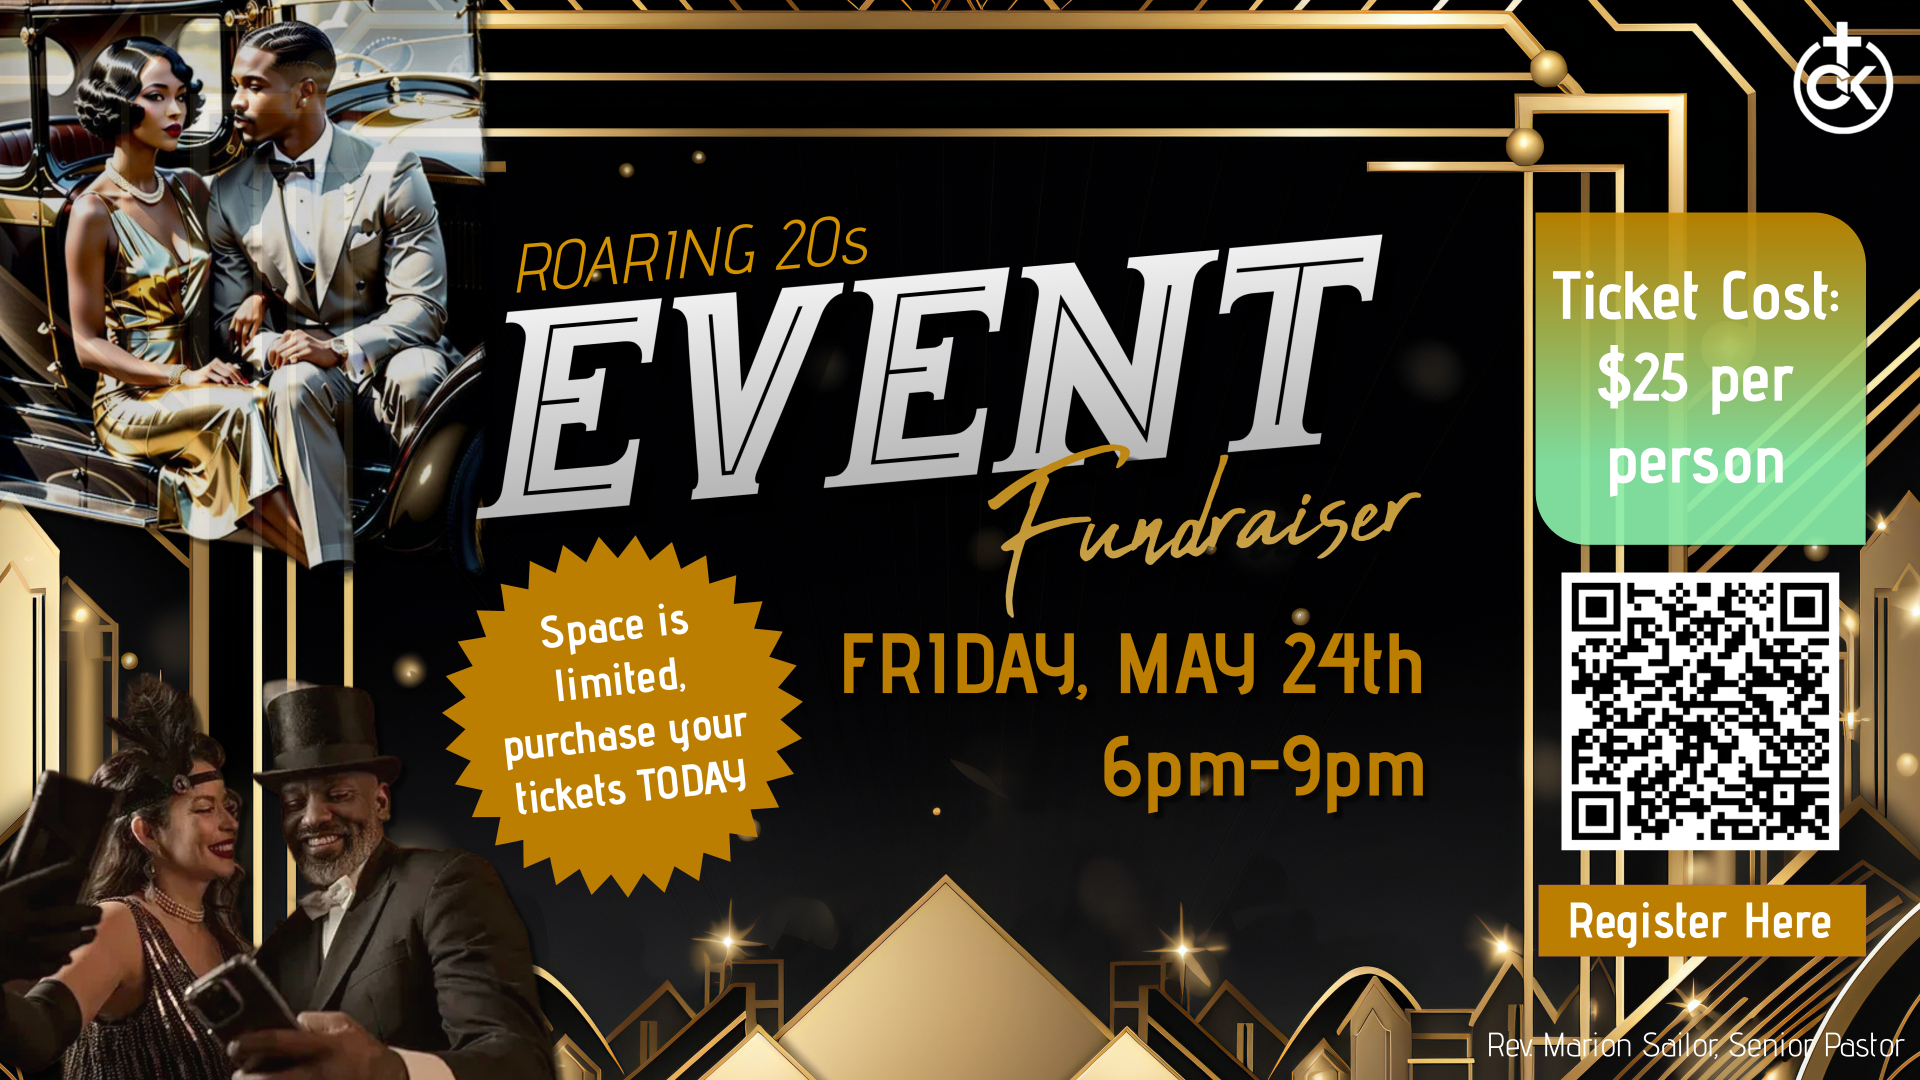 Roaring 20s Event Fundraiser